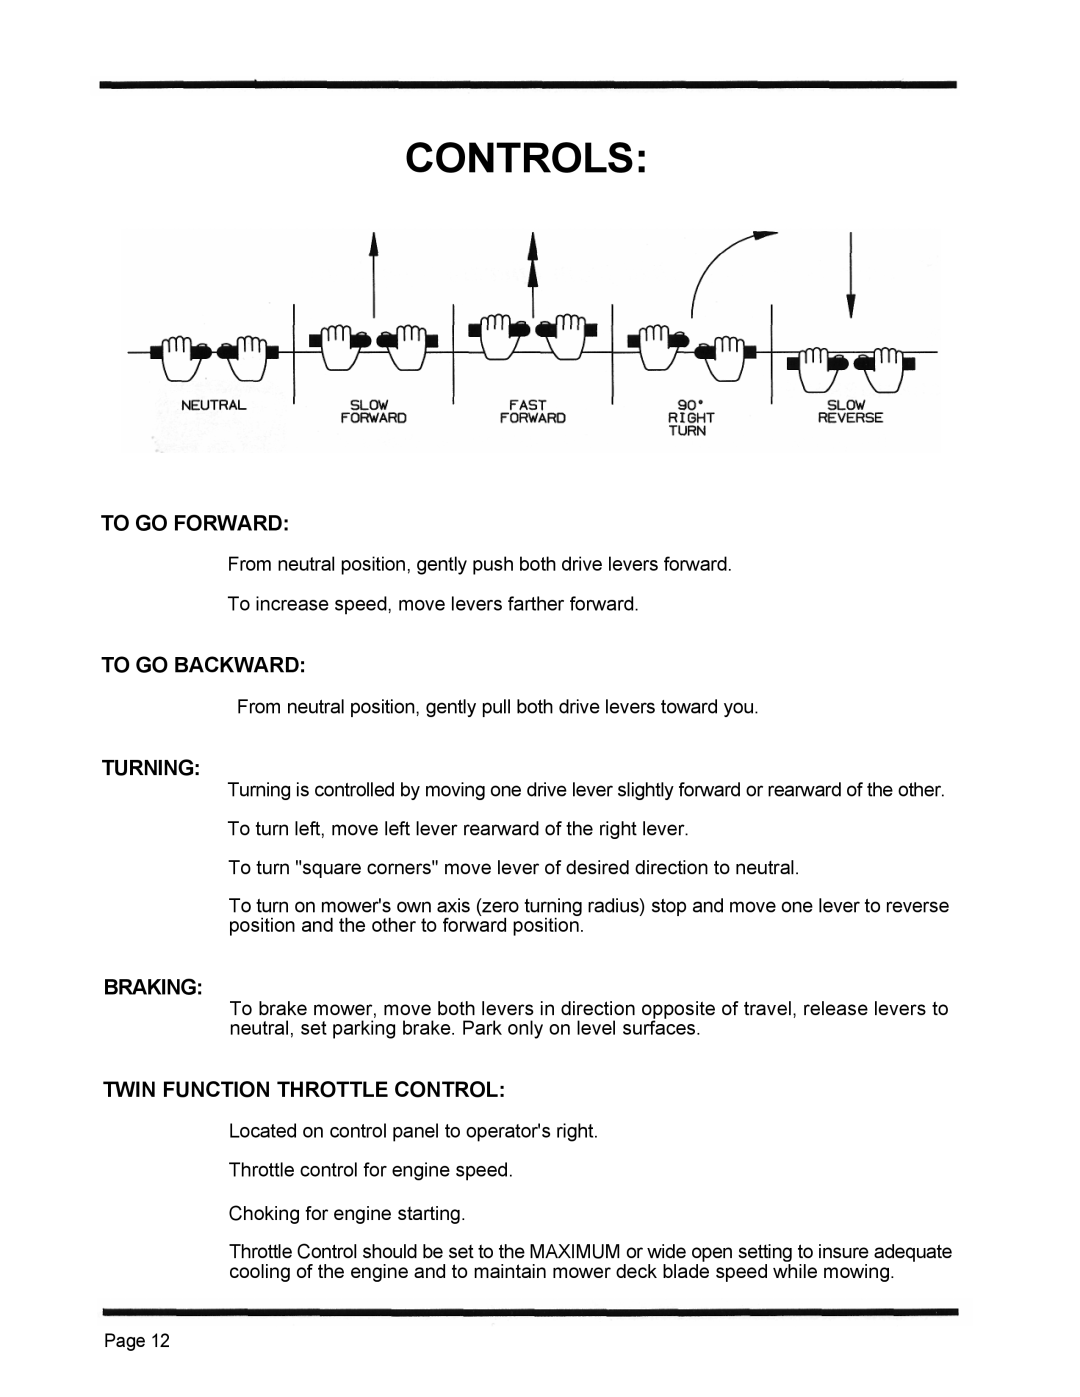 Dixon 1998, ZTR 4515K manual Controls, To Go Forward, To Go Backward, Turning, Braking, Twin Function Throttle Control 